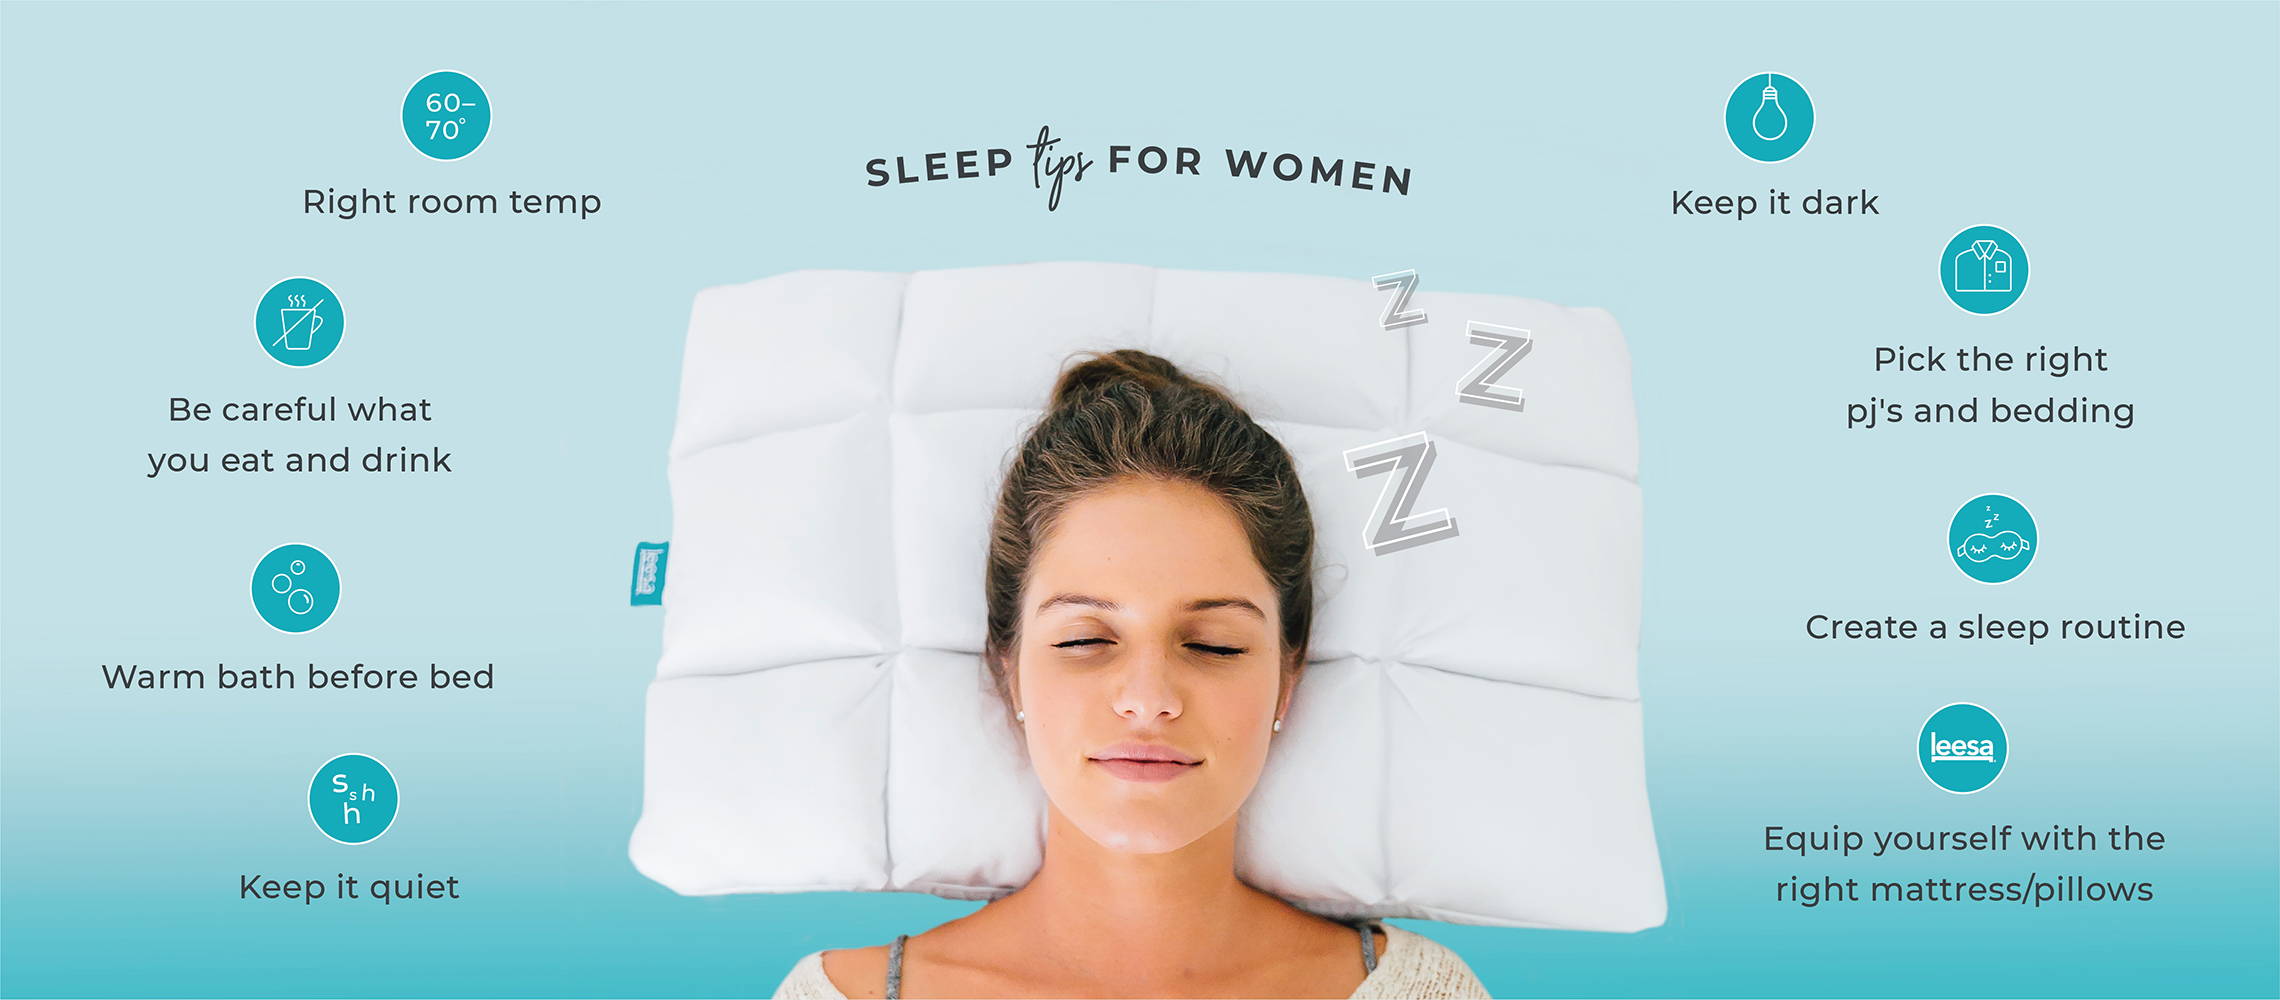 Sleep tips for women